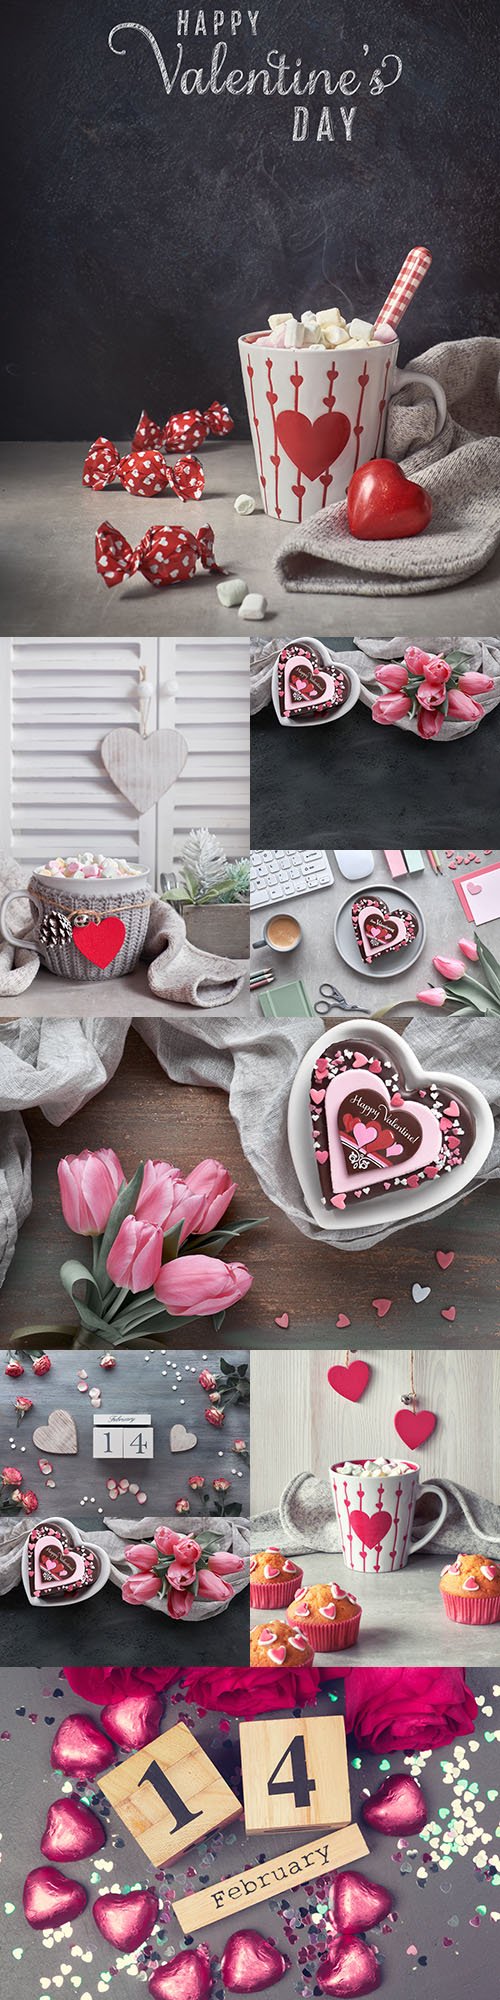 Valentine's Day romantic decorative composition